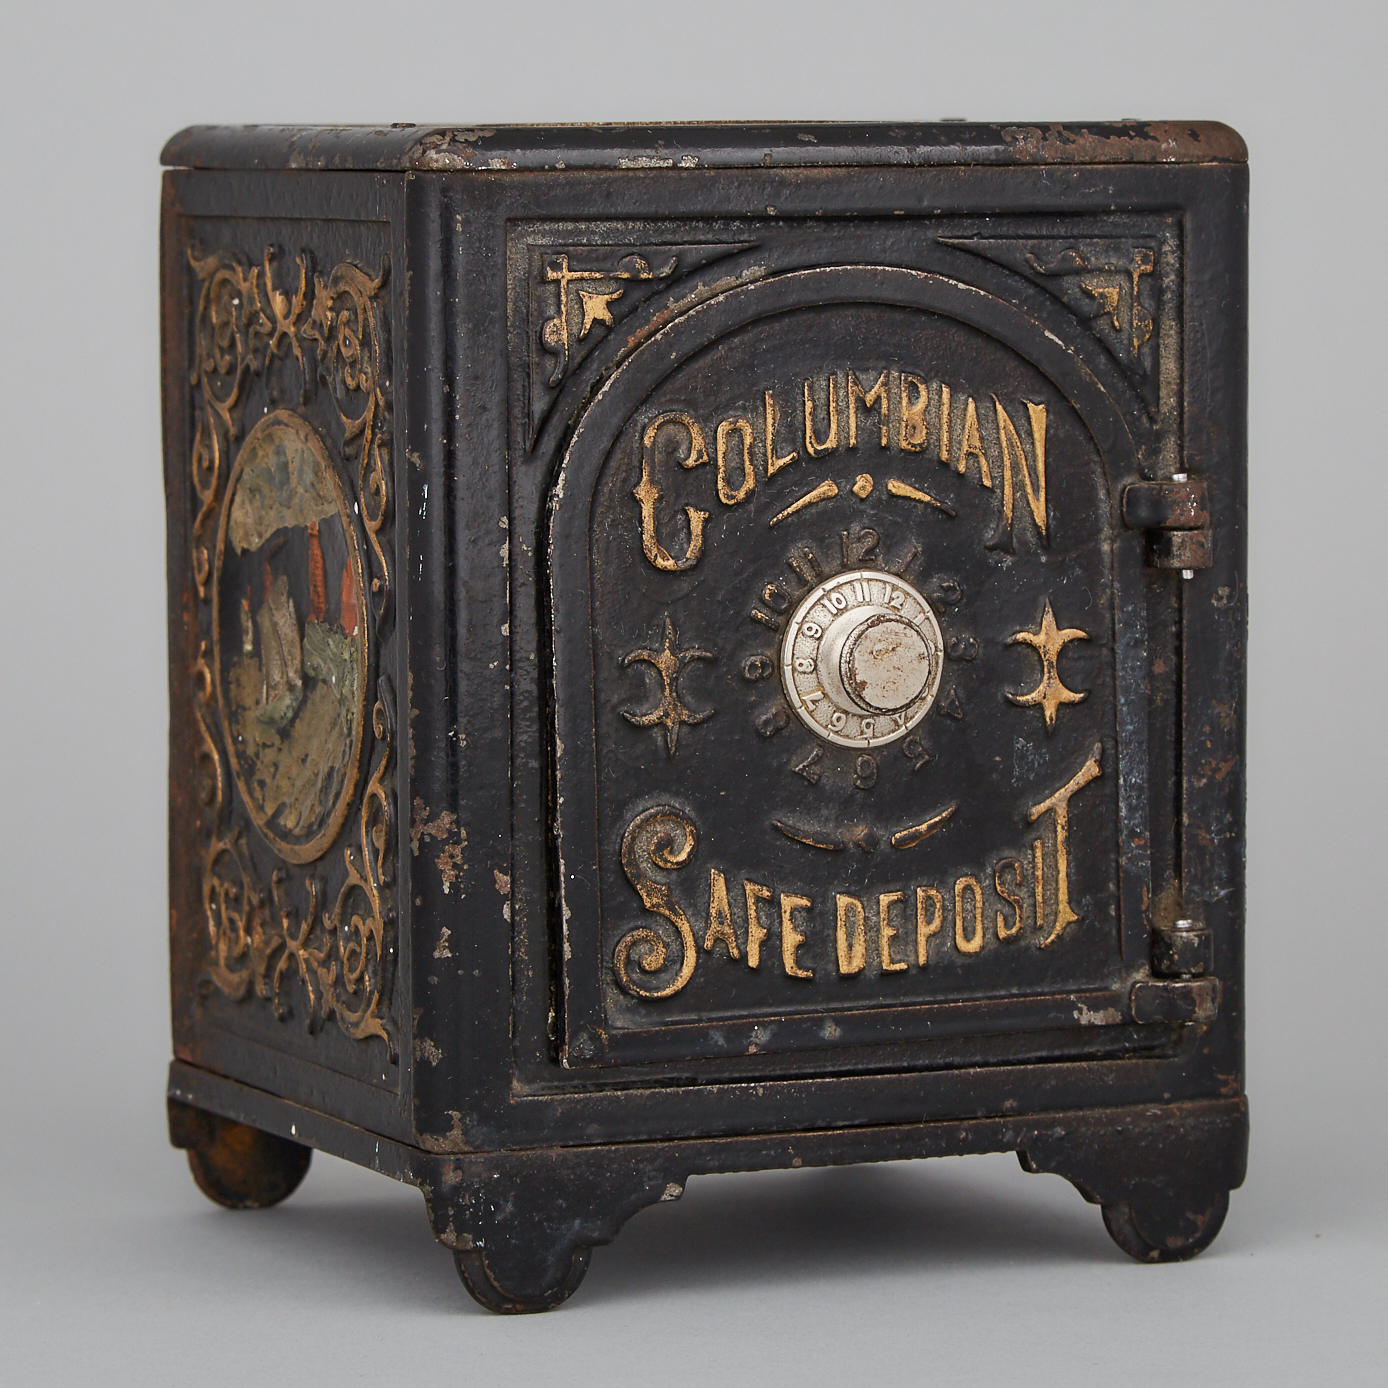 American Painted Cast Iron 'Columbian Safe Deposit' Still Bank, c.1893